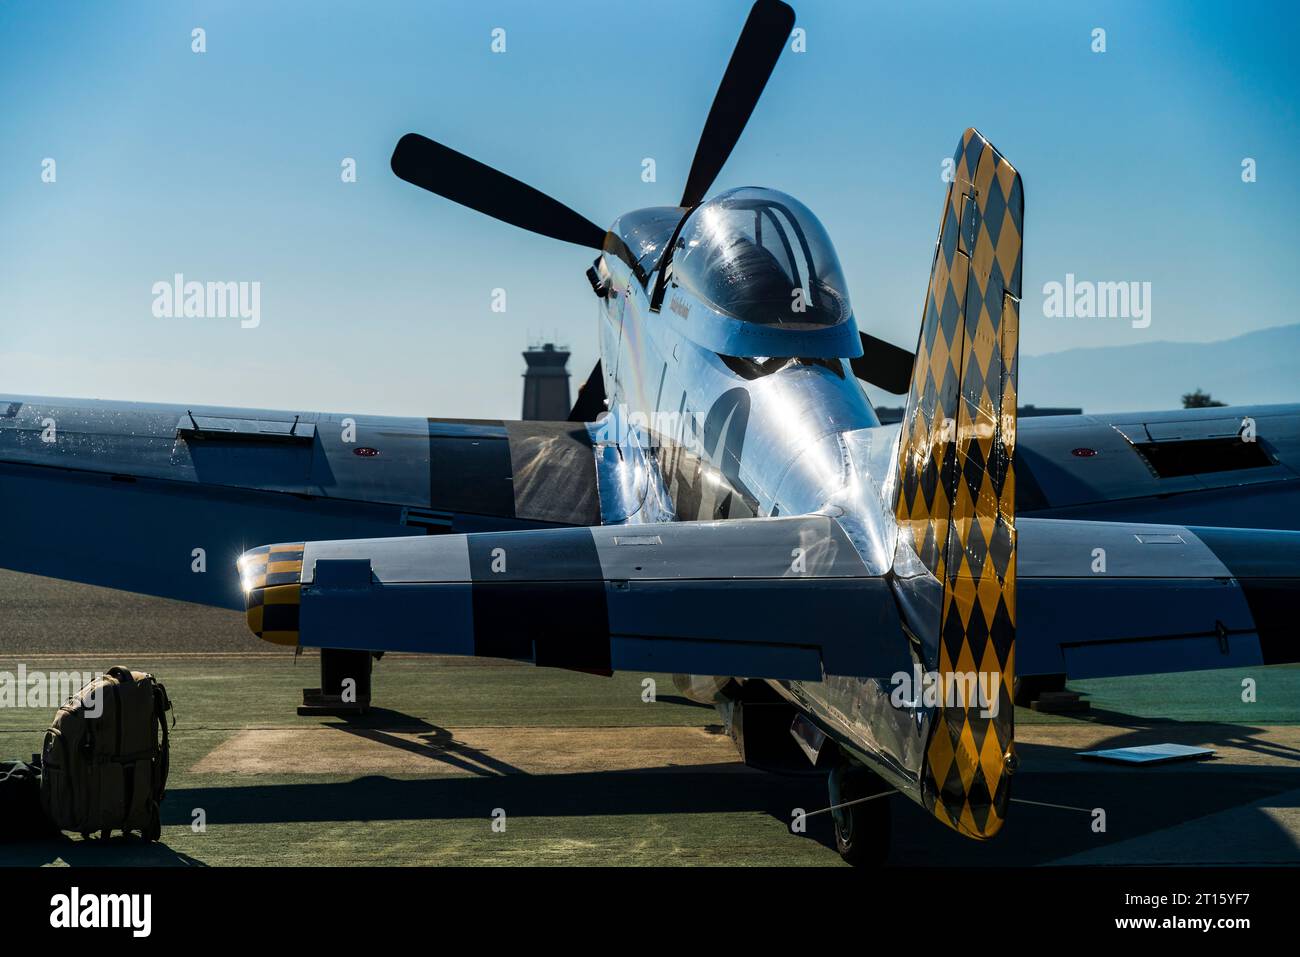 P51 Mustang at the airshow Stock Photo